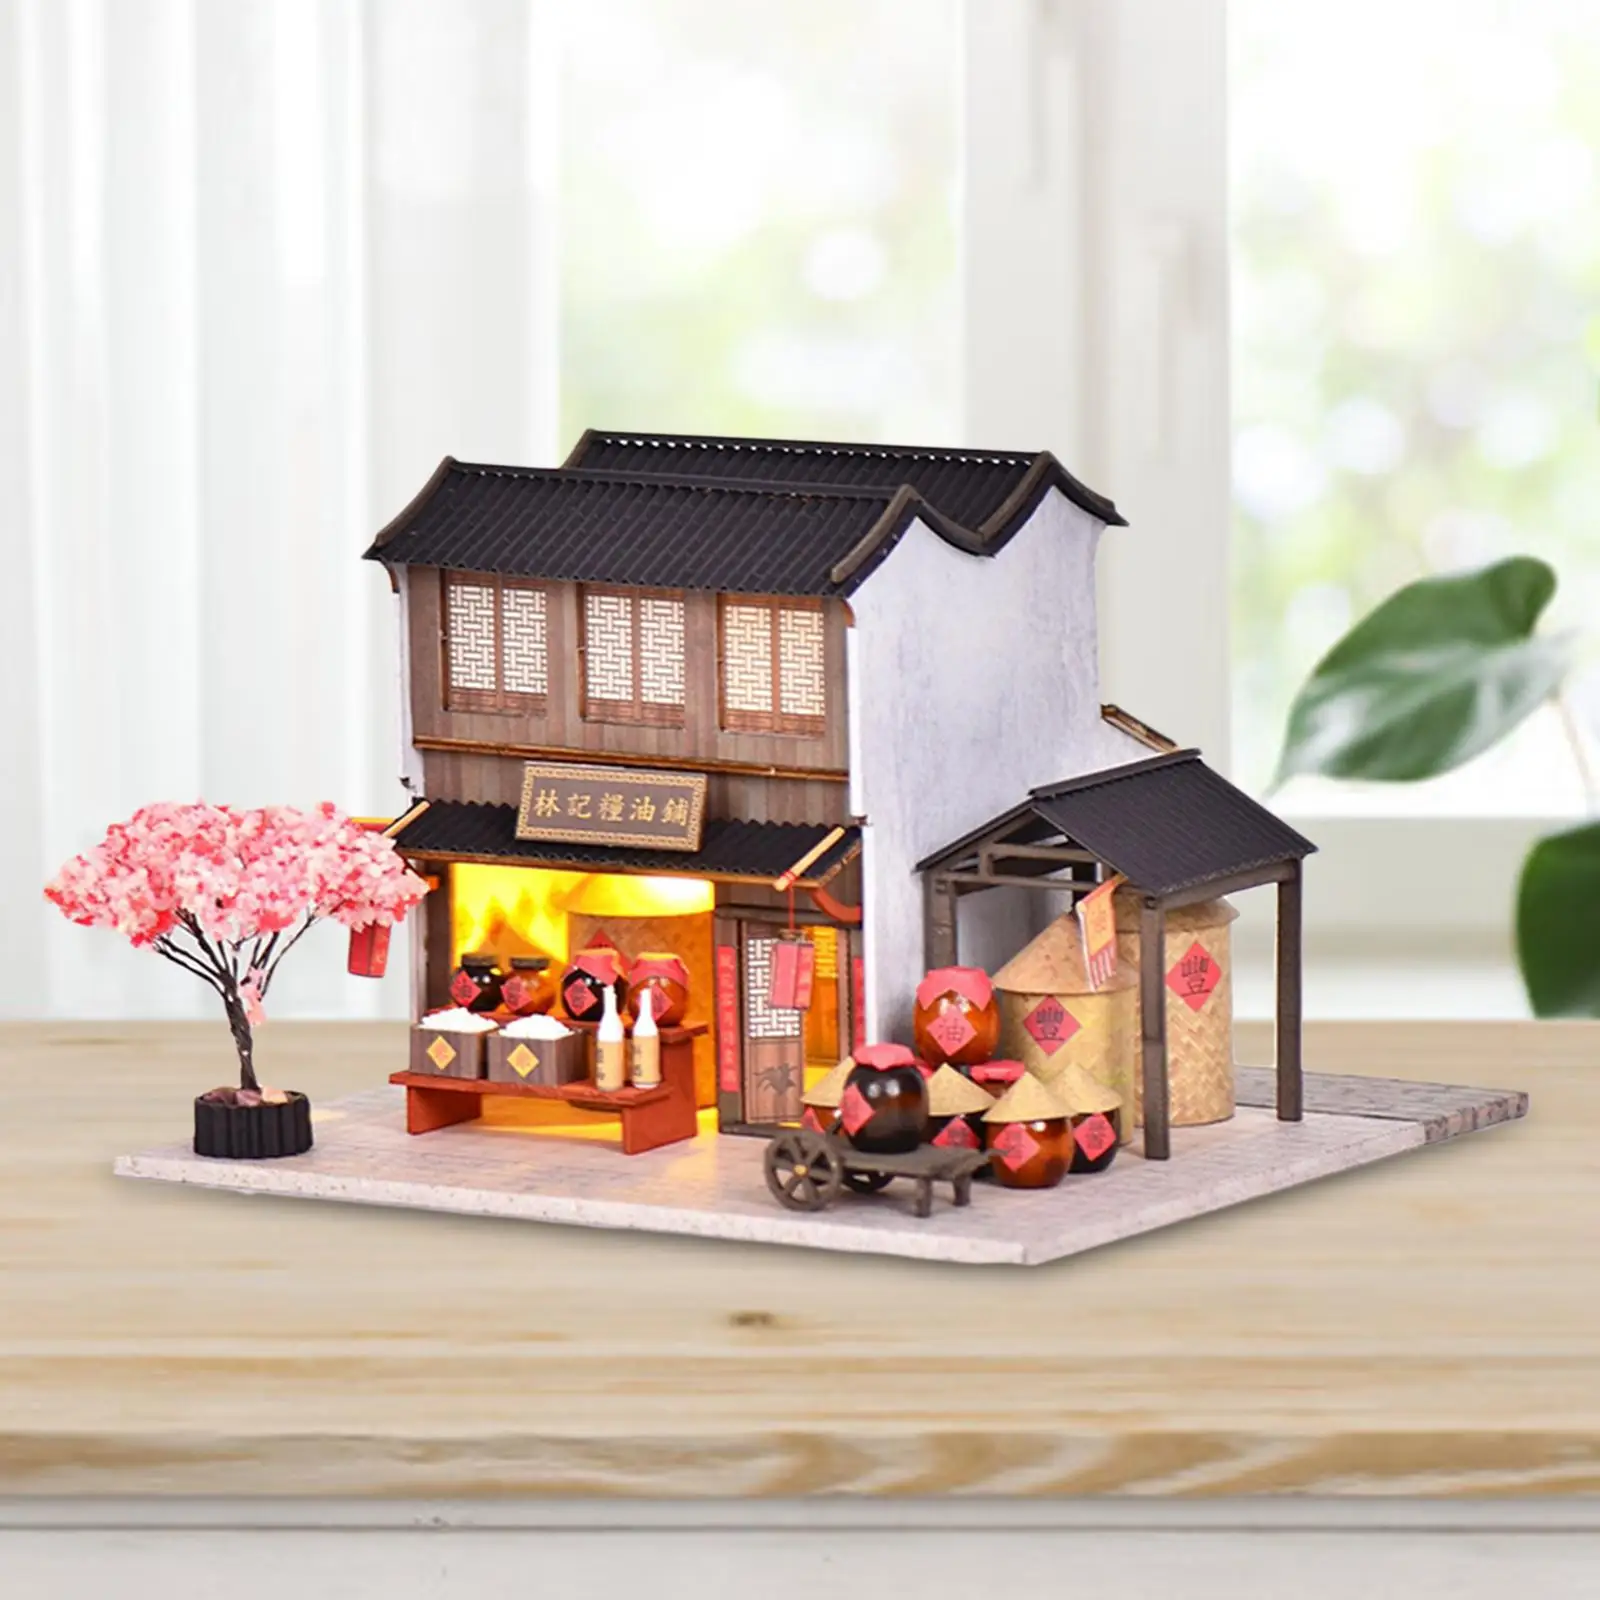 Wooden Small House Set Romantic Gift Building Set Accessories Dollhouse Miniature House for Teens Friends Children Women